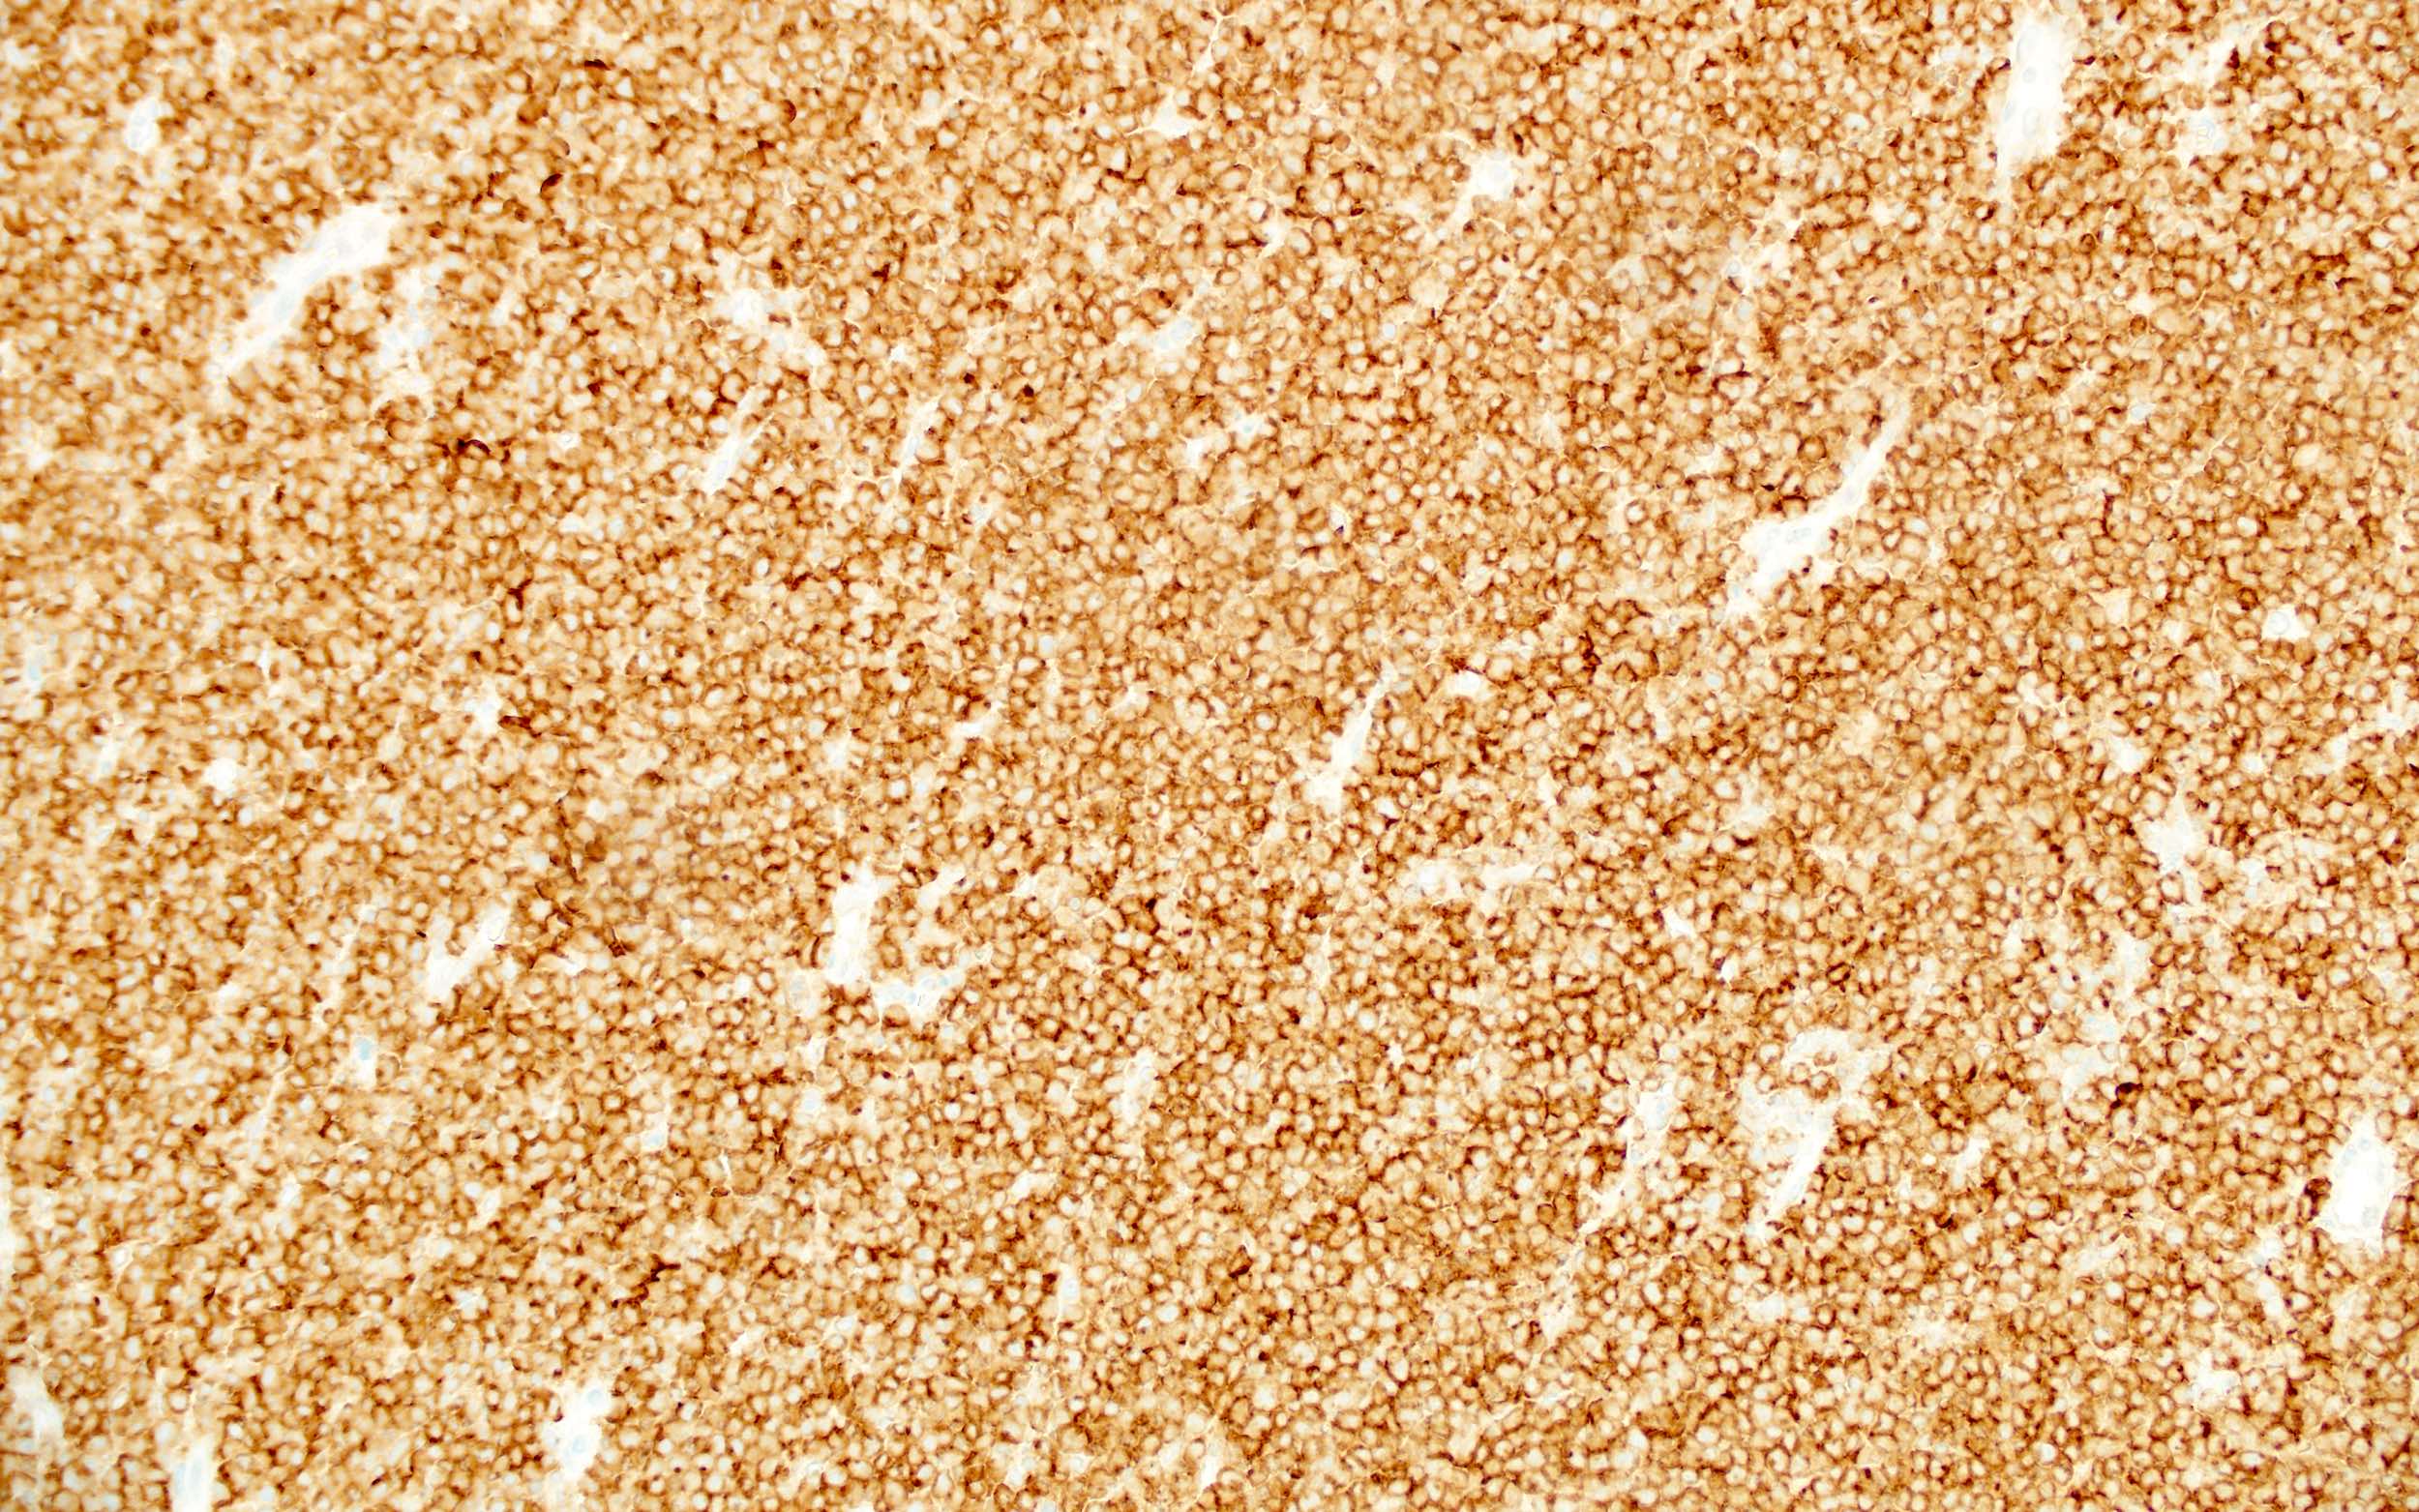 Burkitt lymphoma cells, CD10+